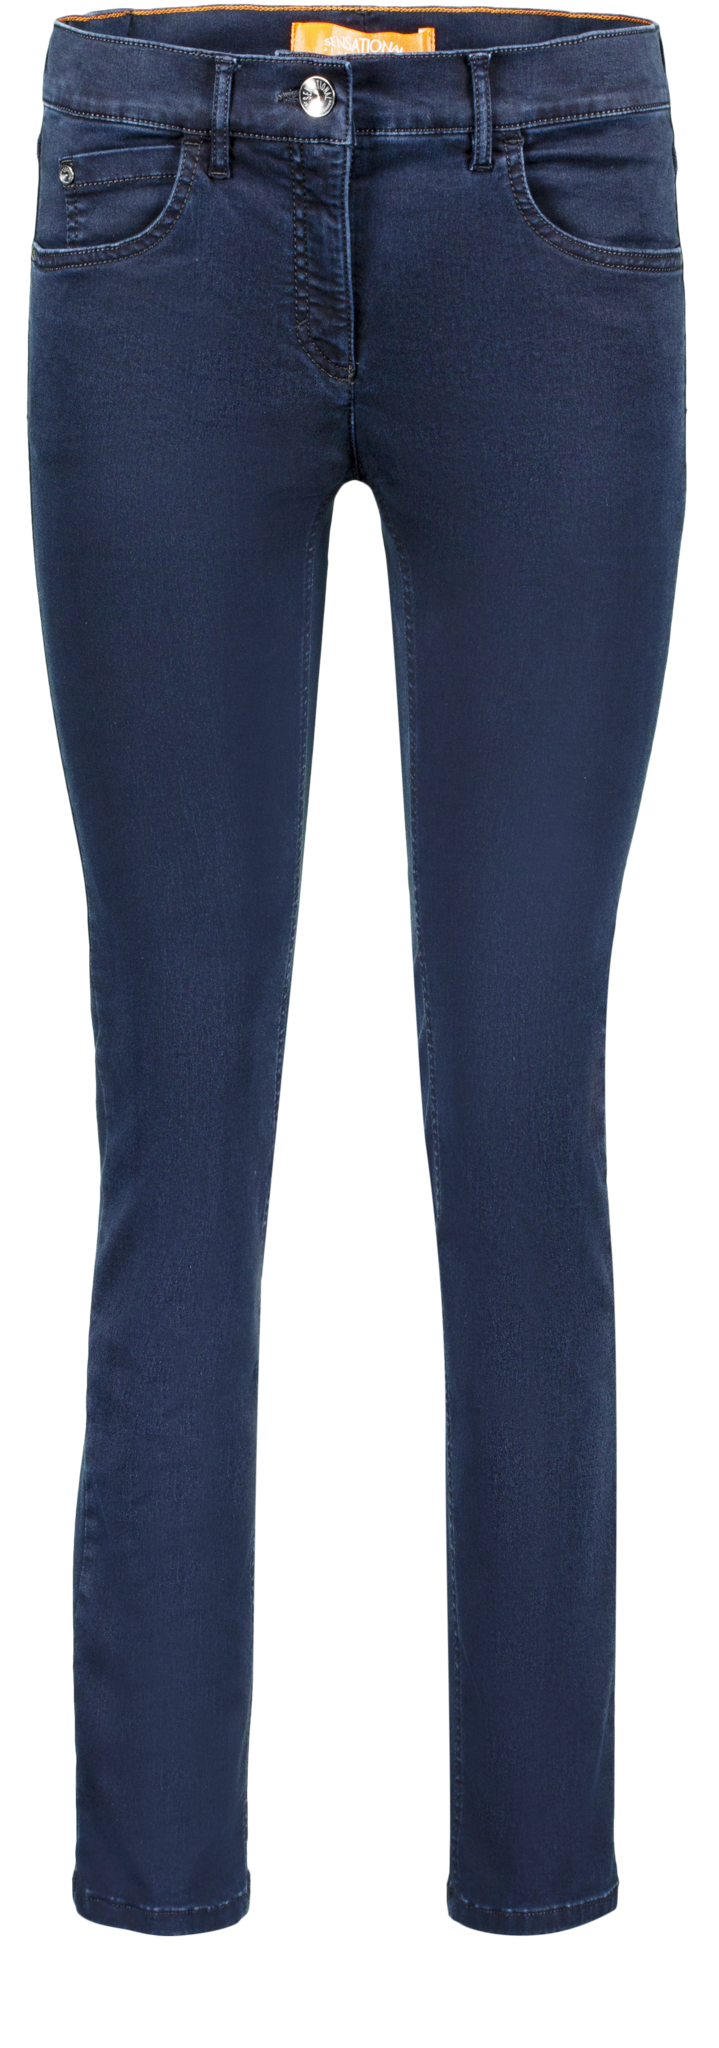 Jeans Twigy Dark Bleu 4005-560 06 Wit Mode